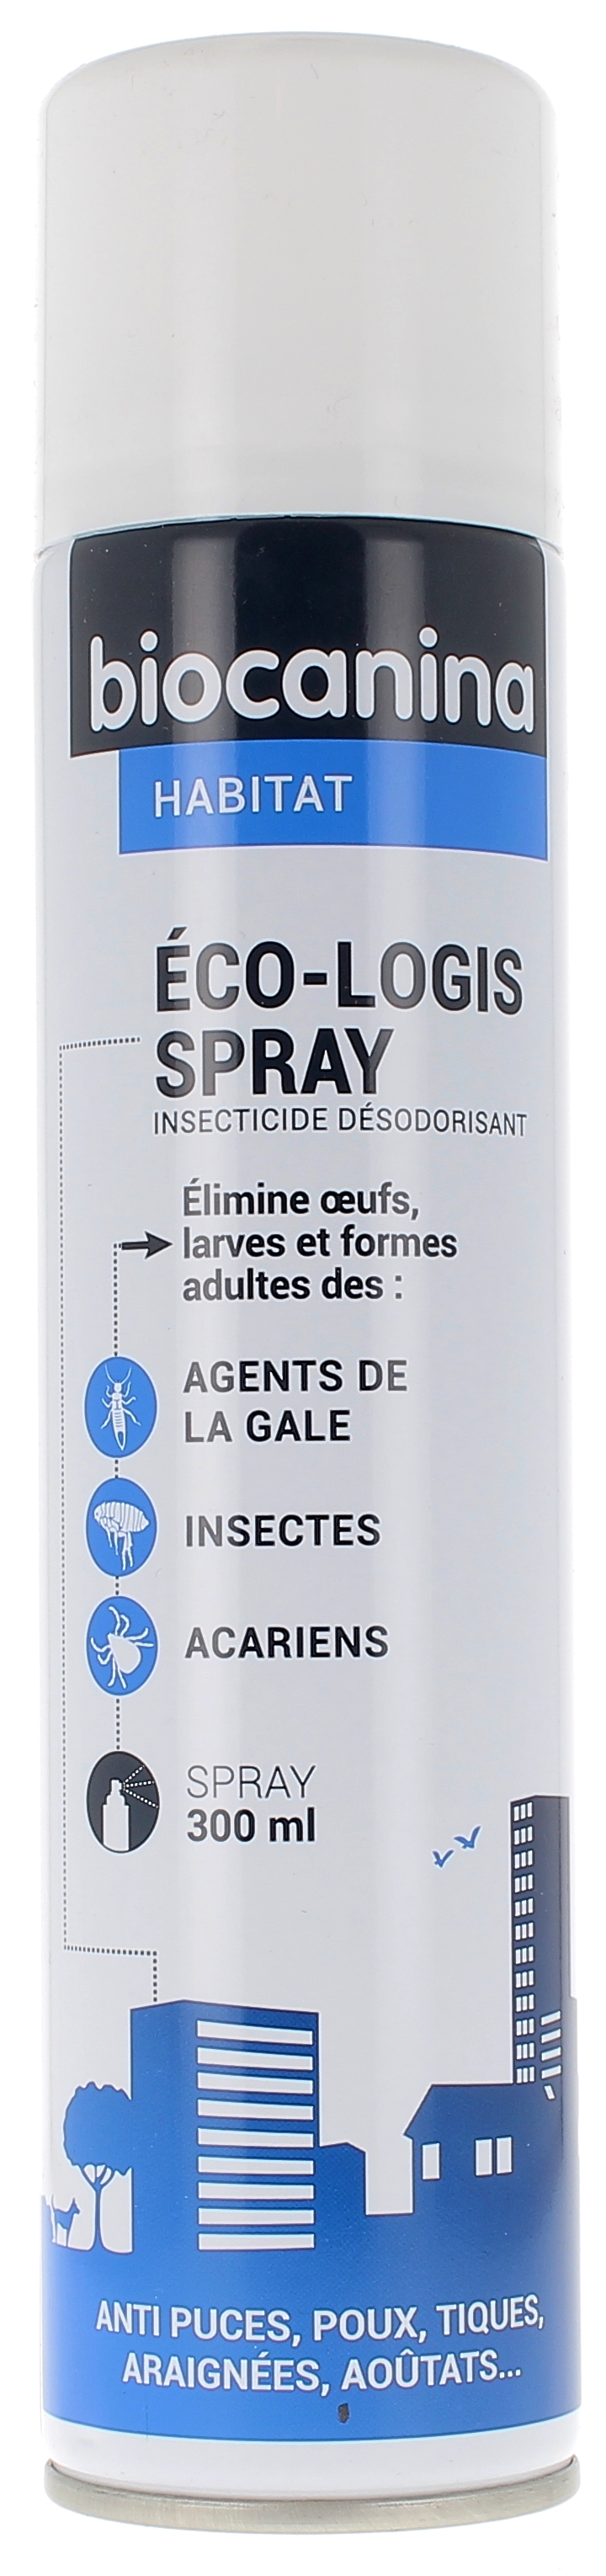 Clément Thékan - Insecticide habitat - Anti-puces et anti-acariens